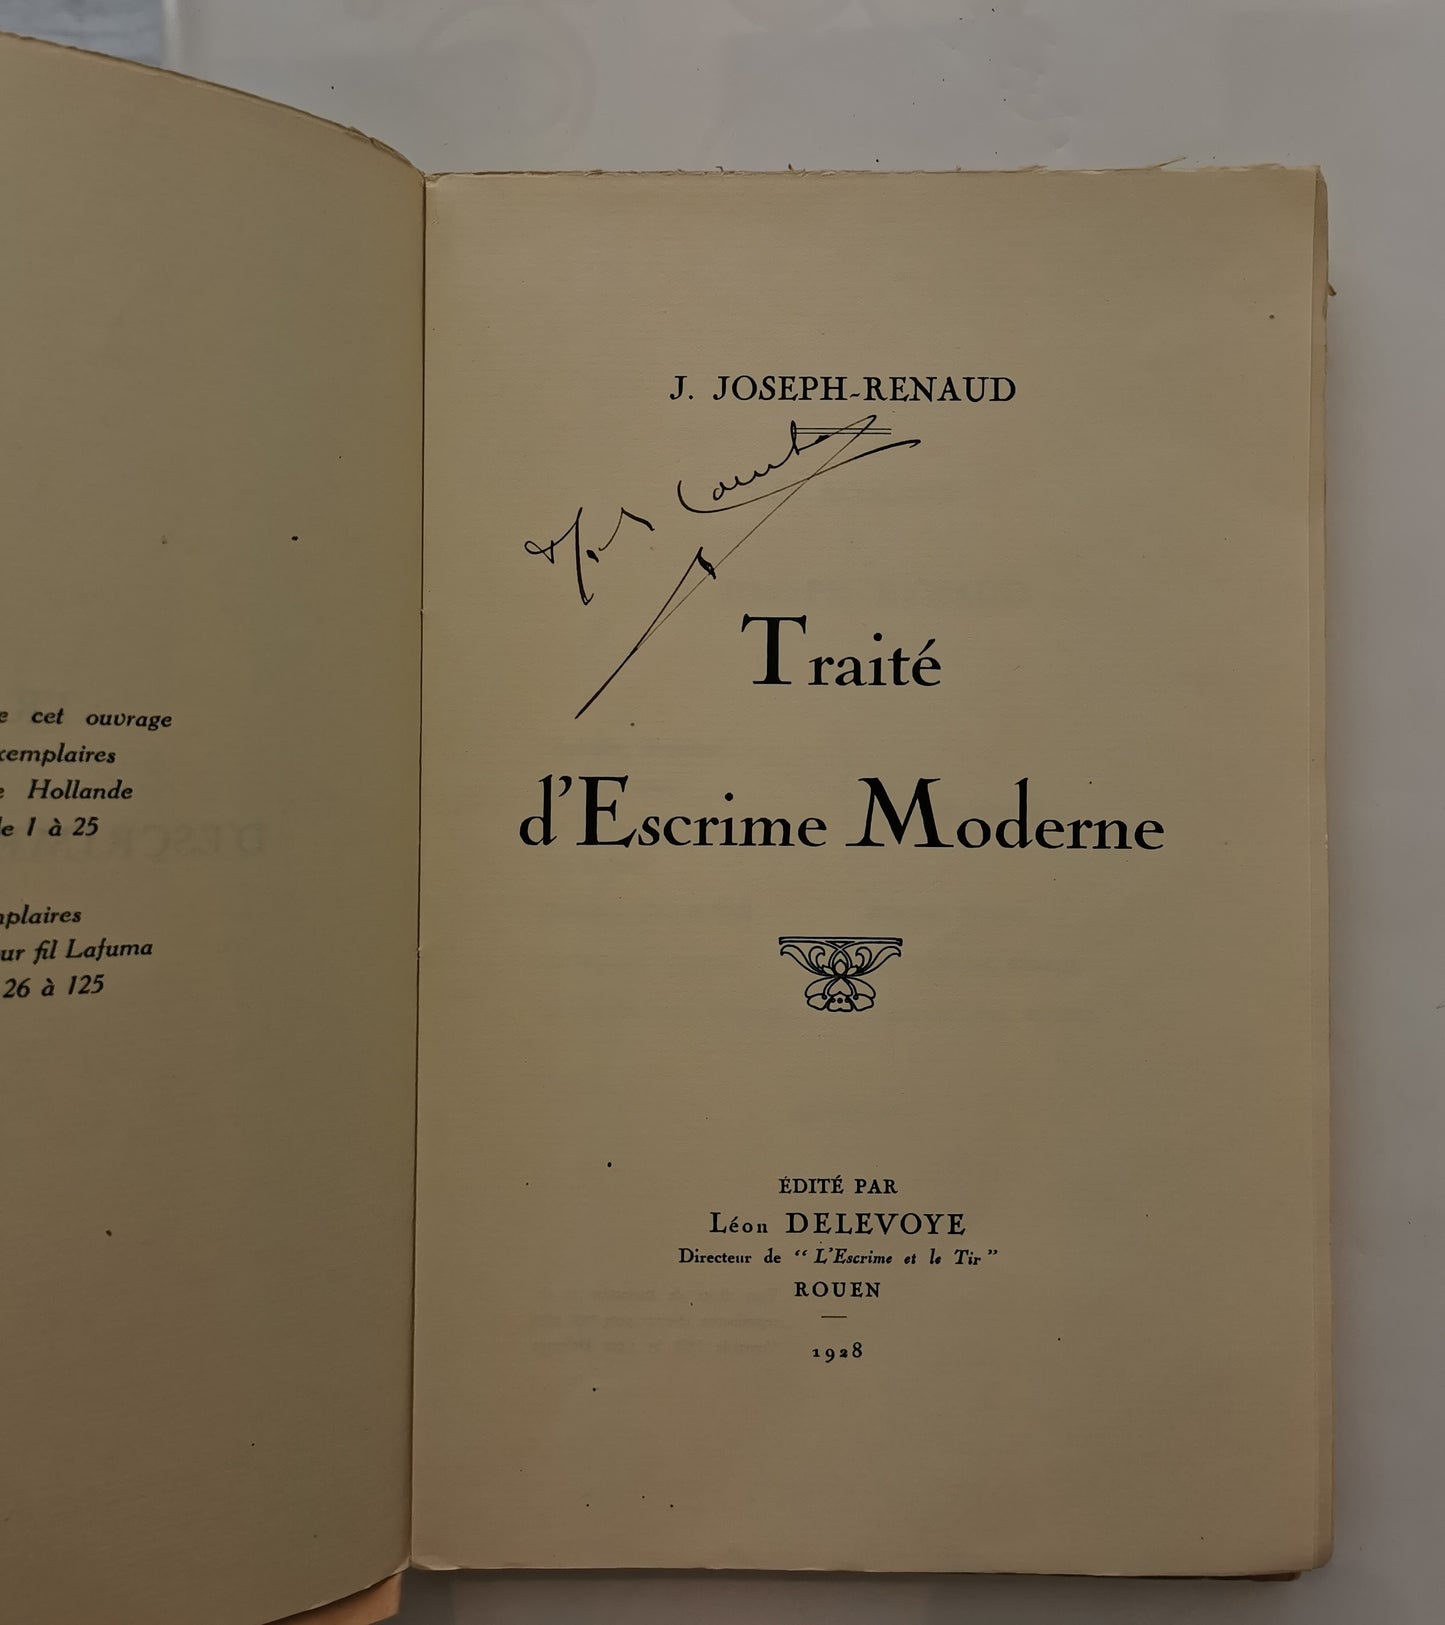 Traité d'Escrime Moderne, J. Joseph-Renaud, ed. Léon Delevoye, 1928.